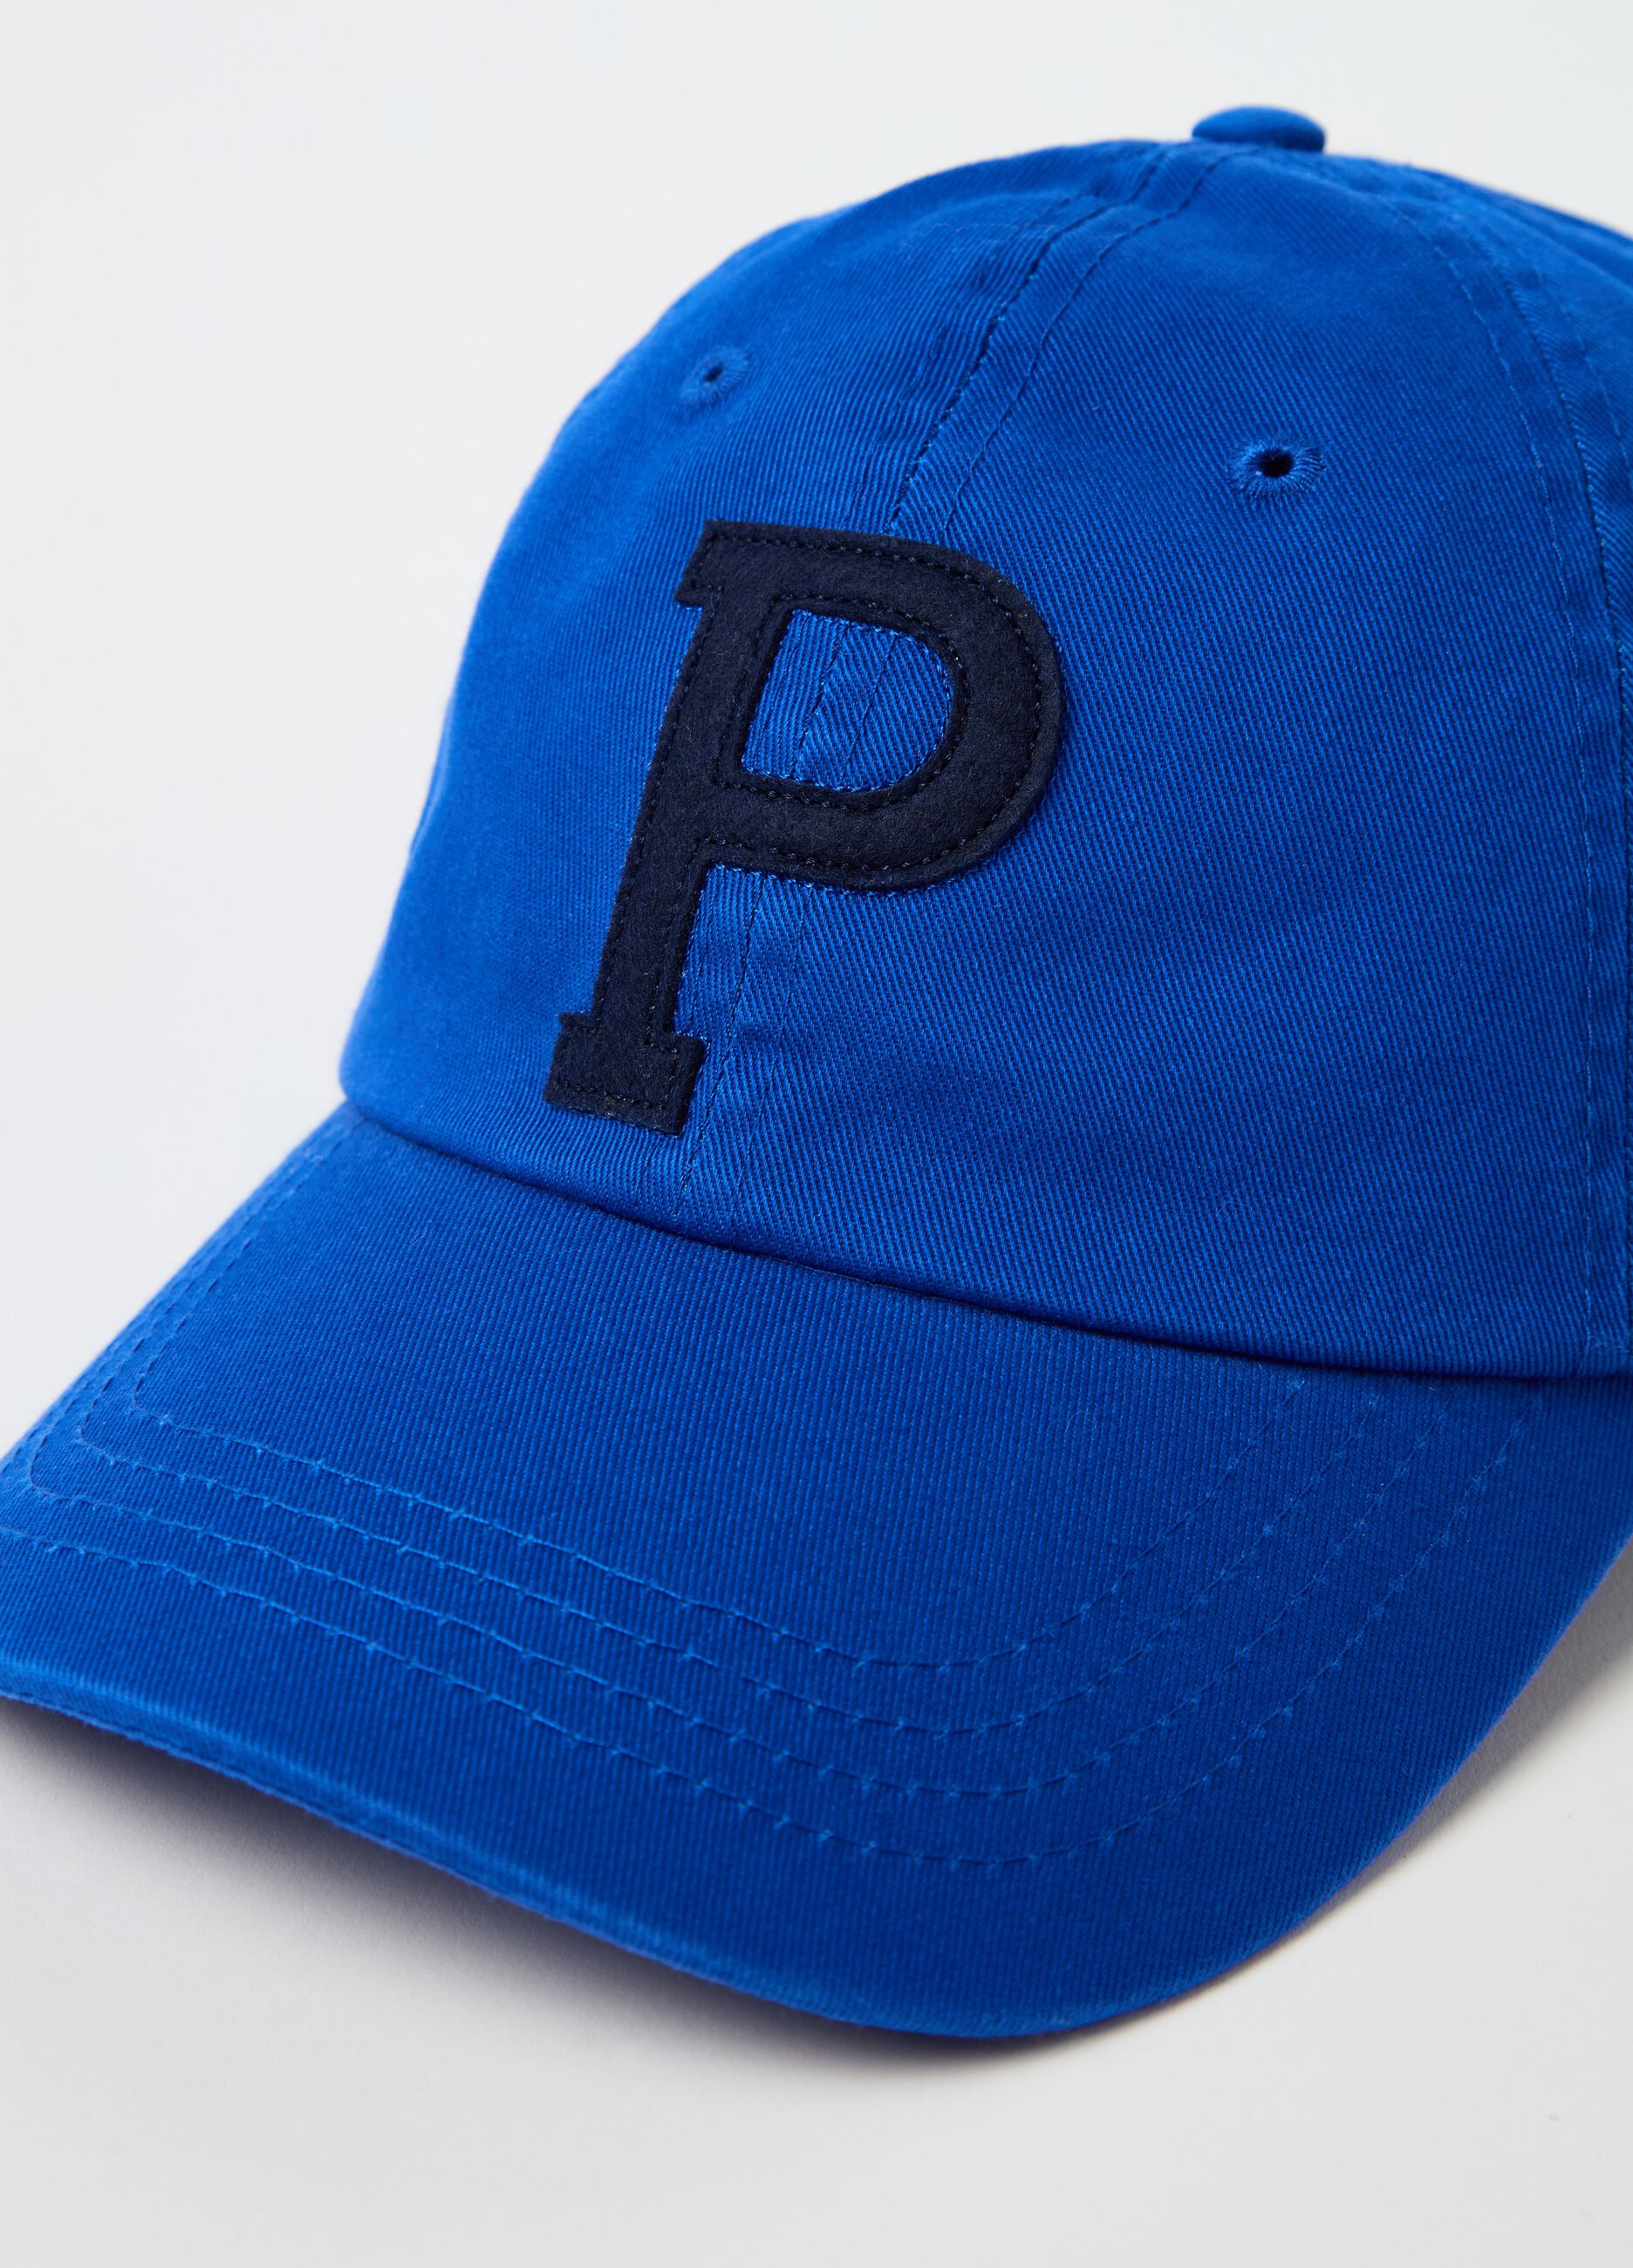 Baseball cap with logo_2